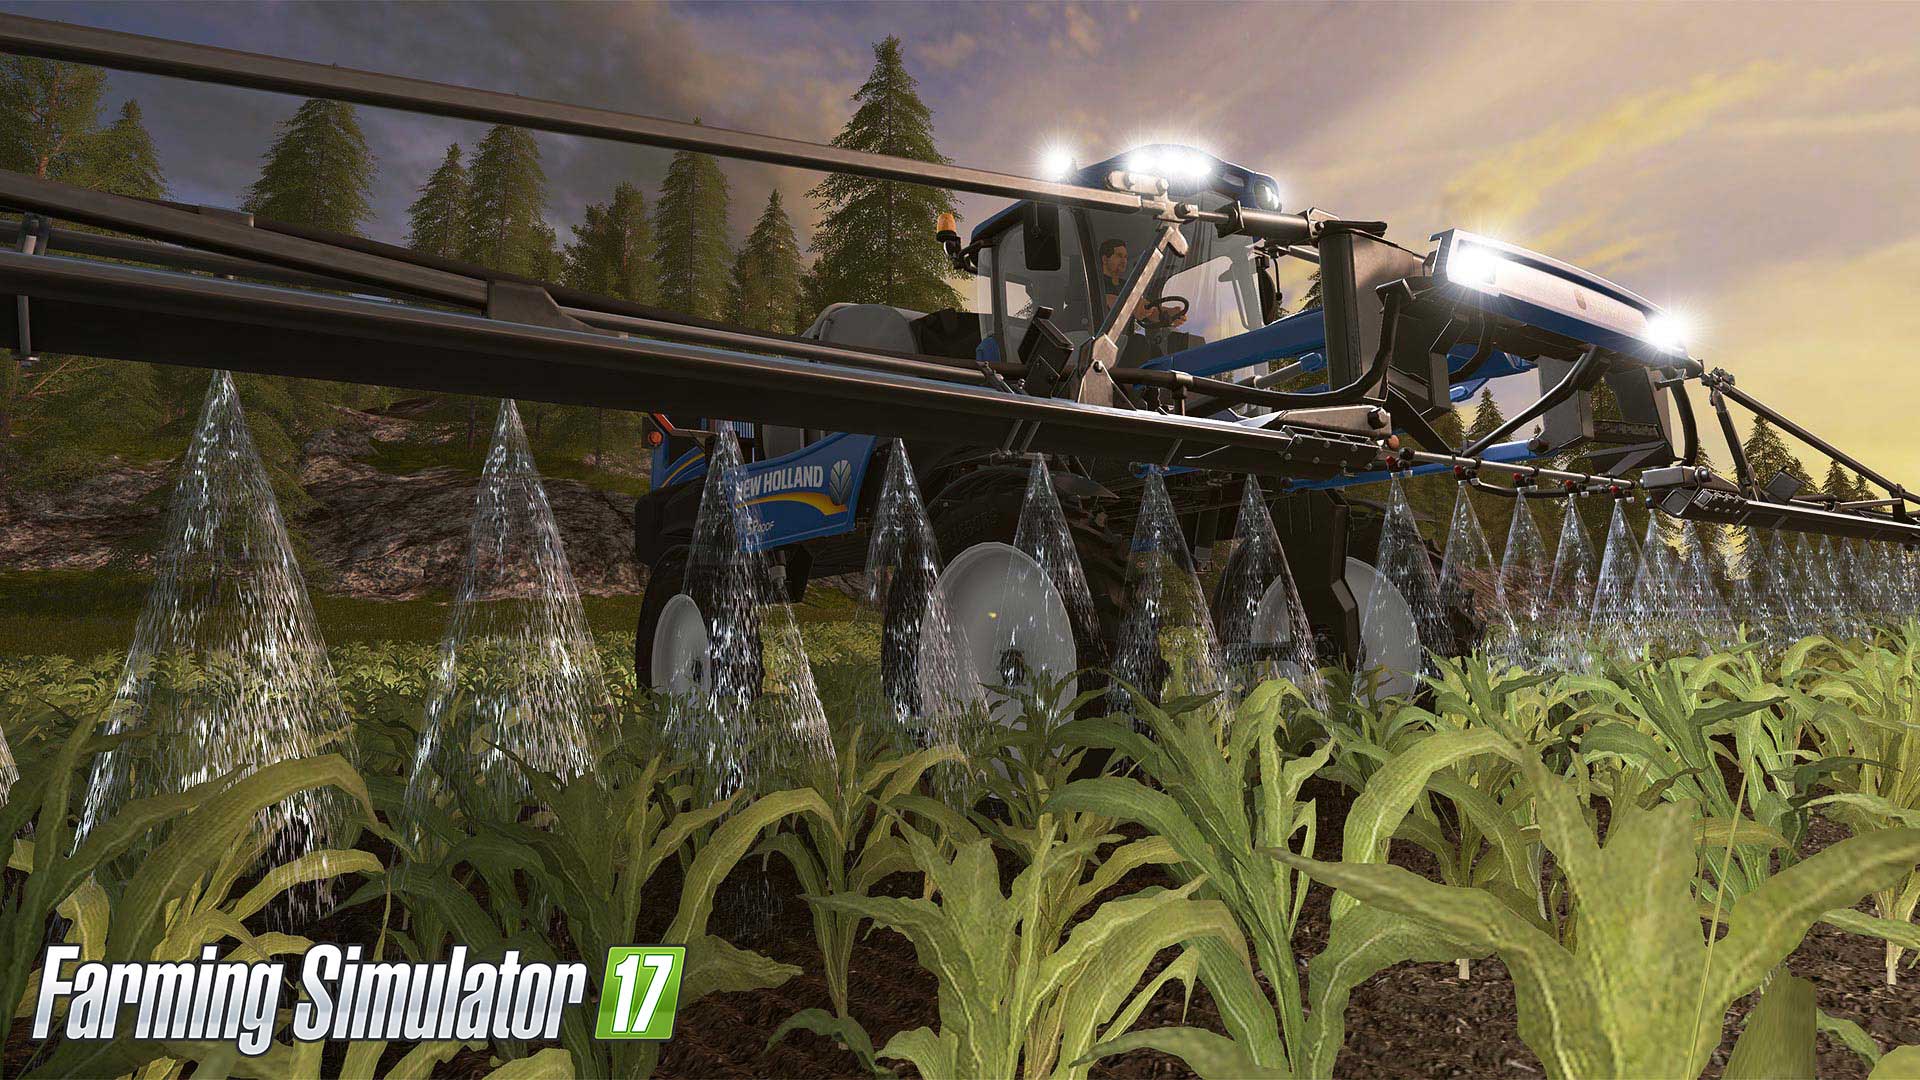 farming simulator 18 pc